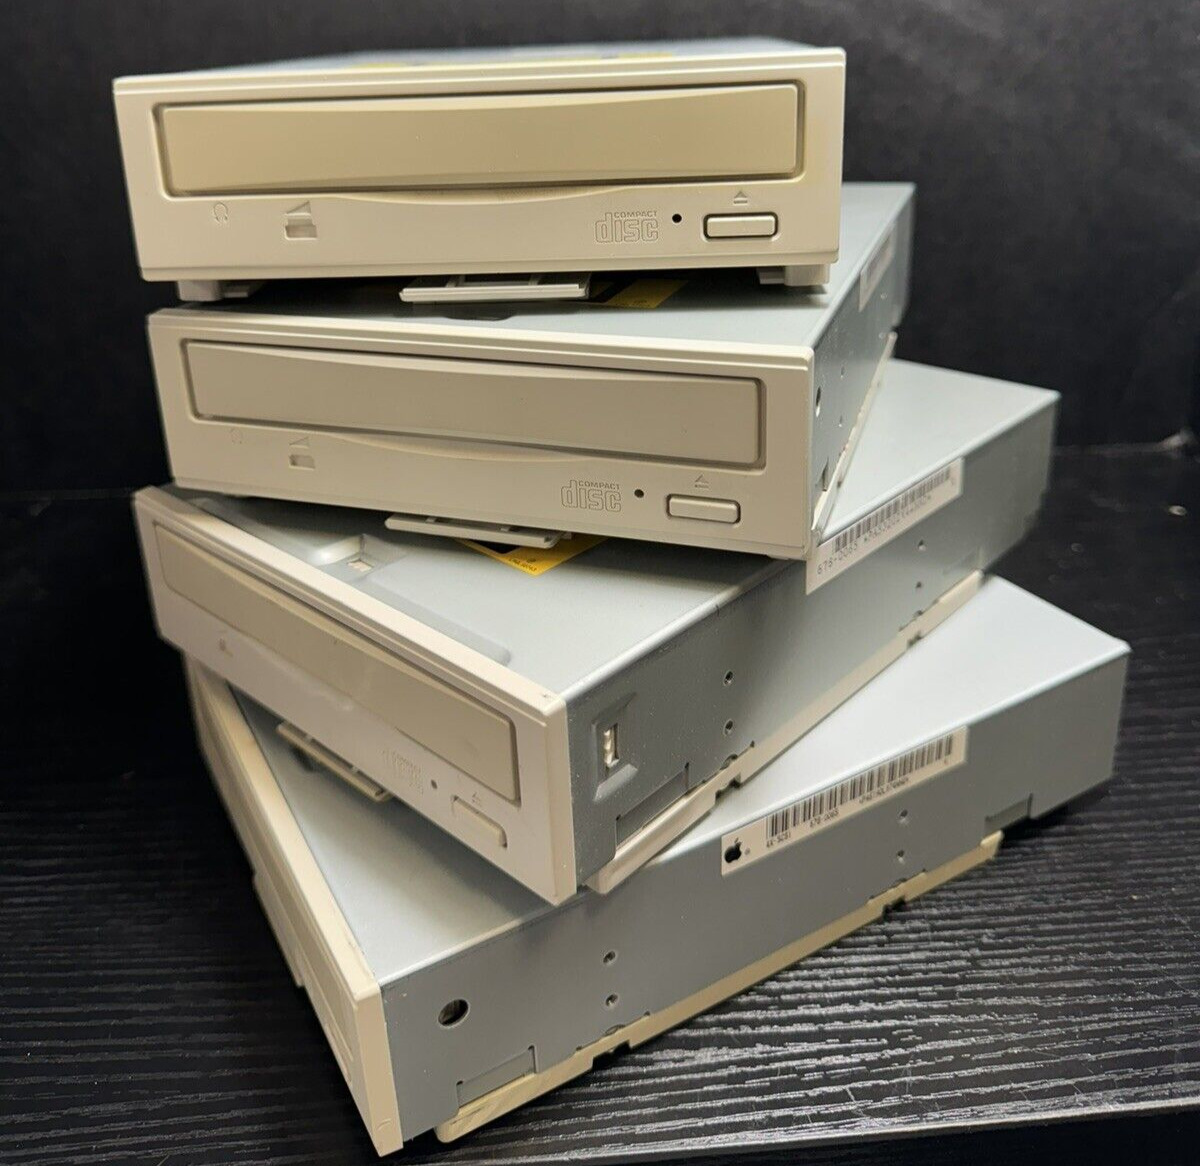 AppleCD 600i - Apple Mac Macintosh 4x SCSI 50pin CD-ROM drive 678-0065 CR-504